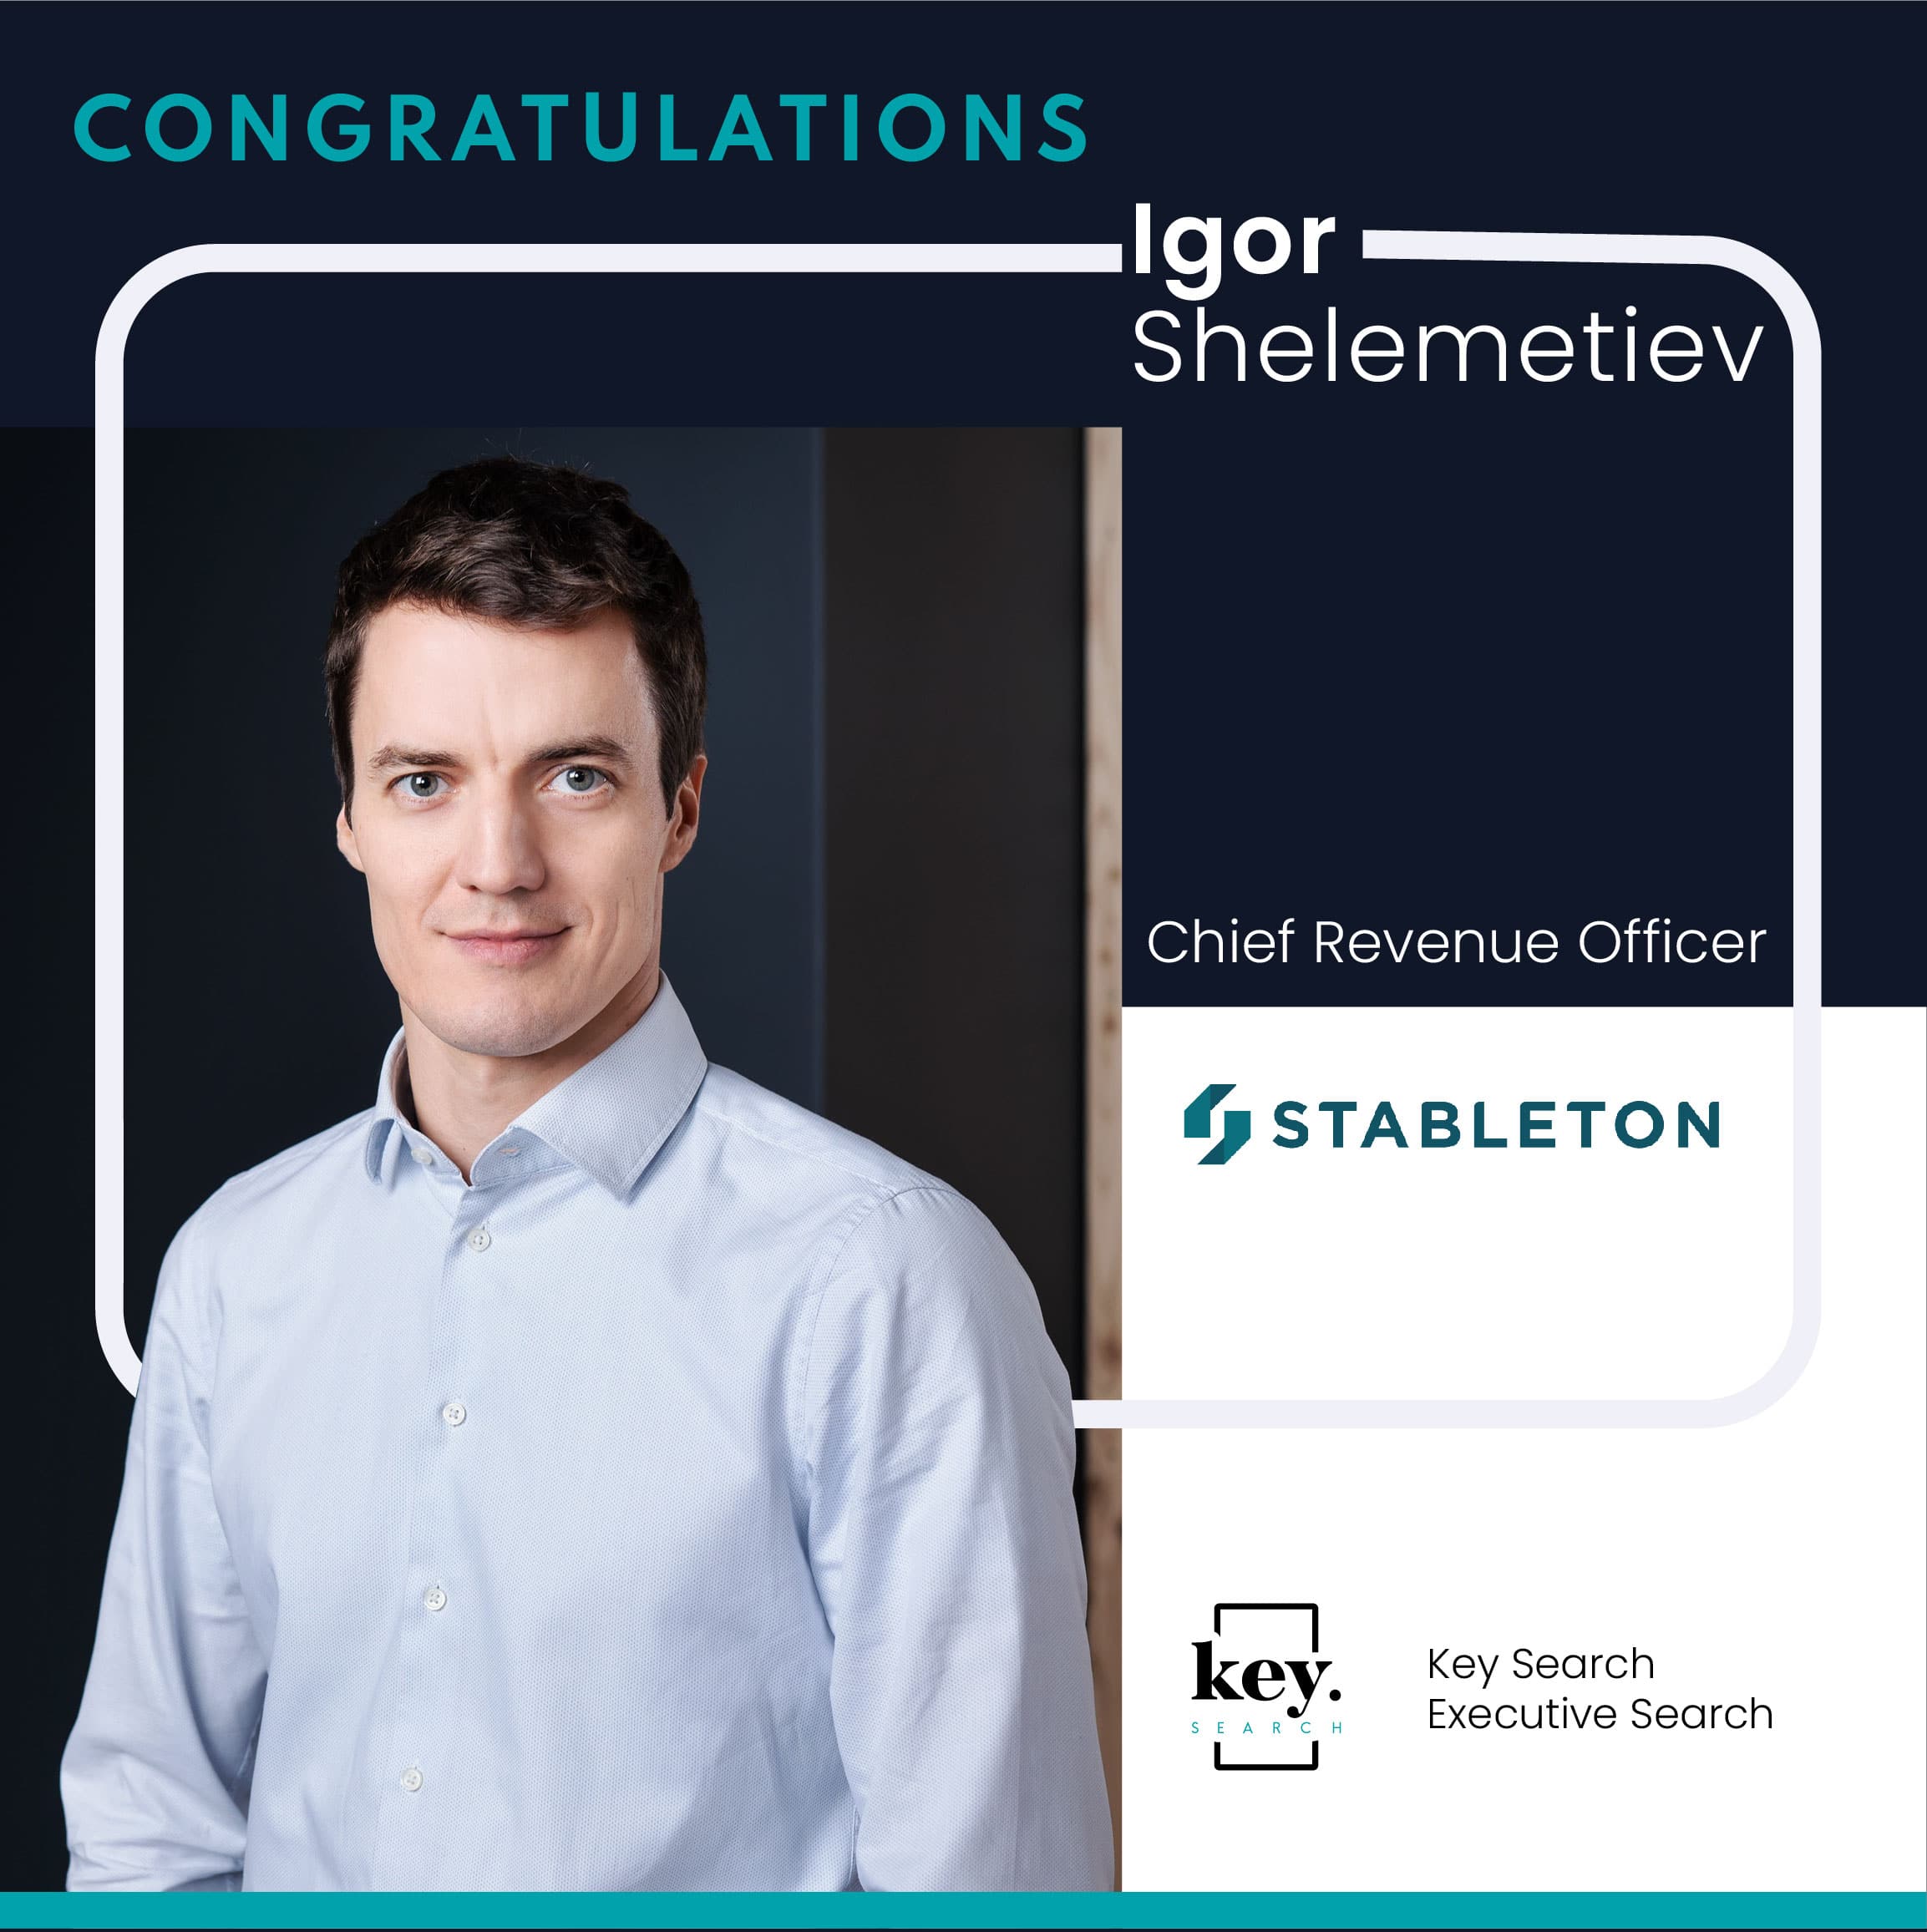 Congratulations_Post_Igor-Shelemetiev